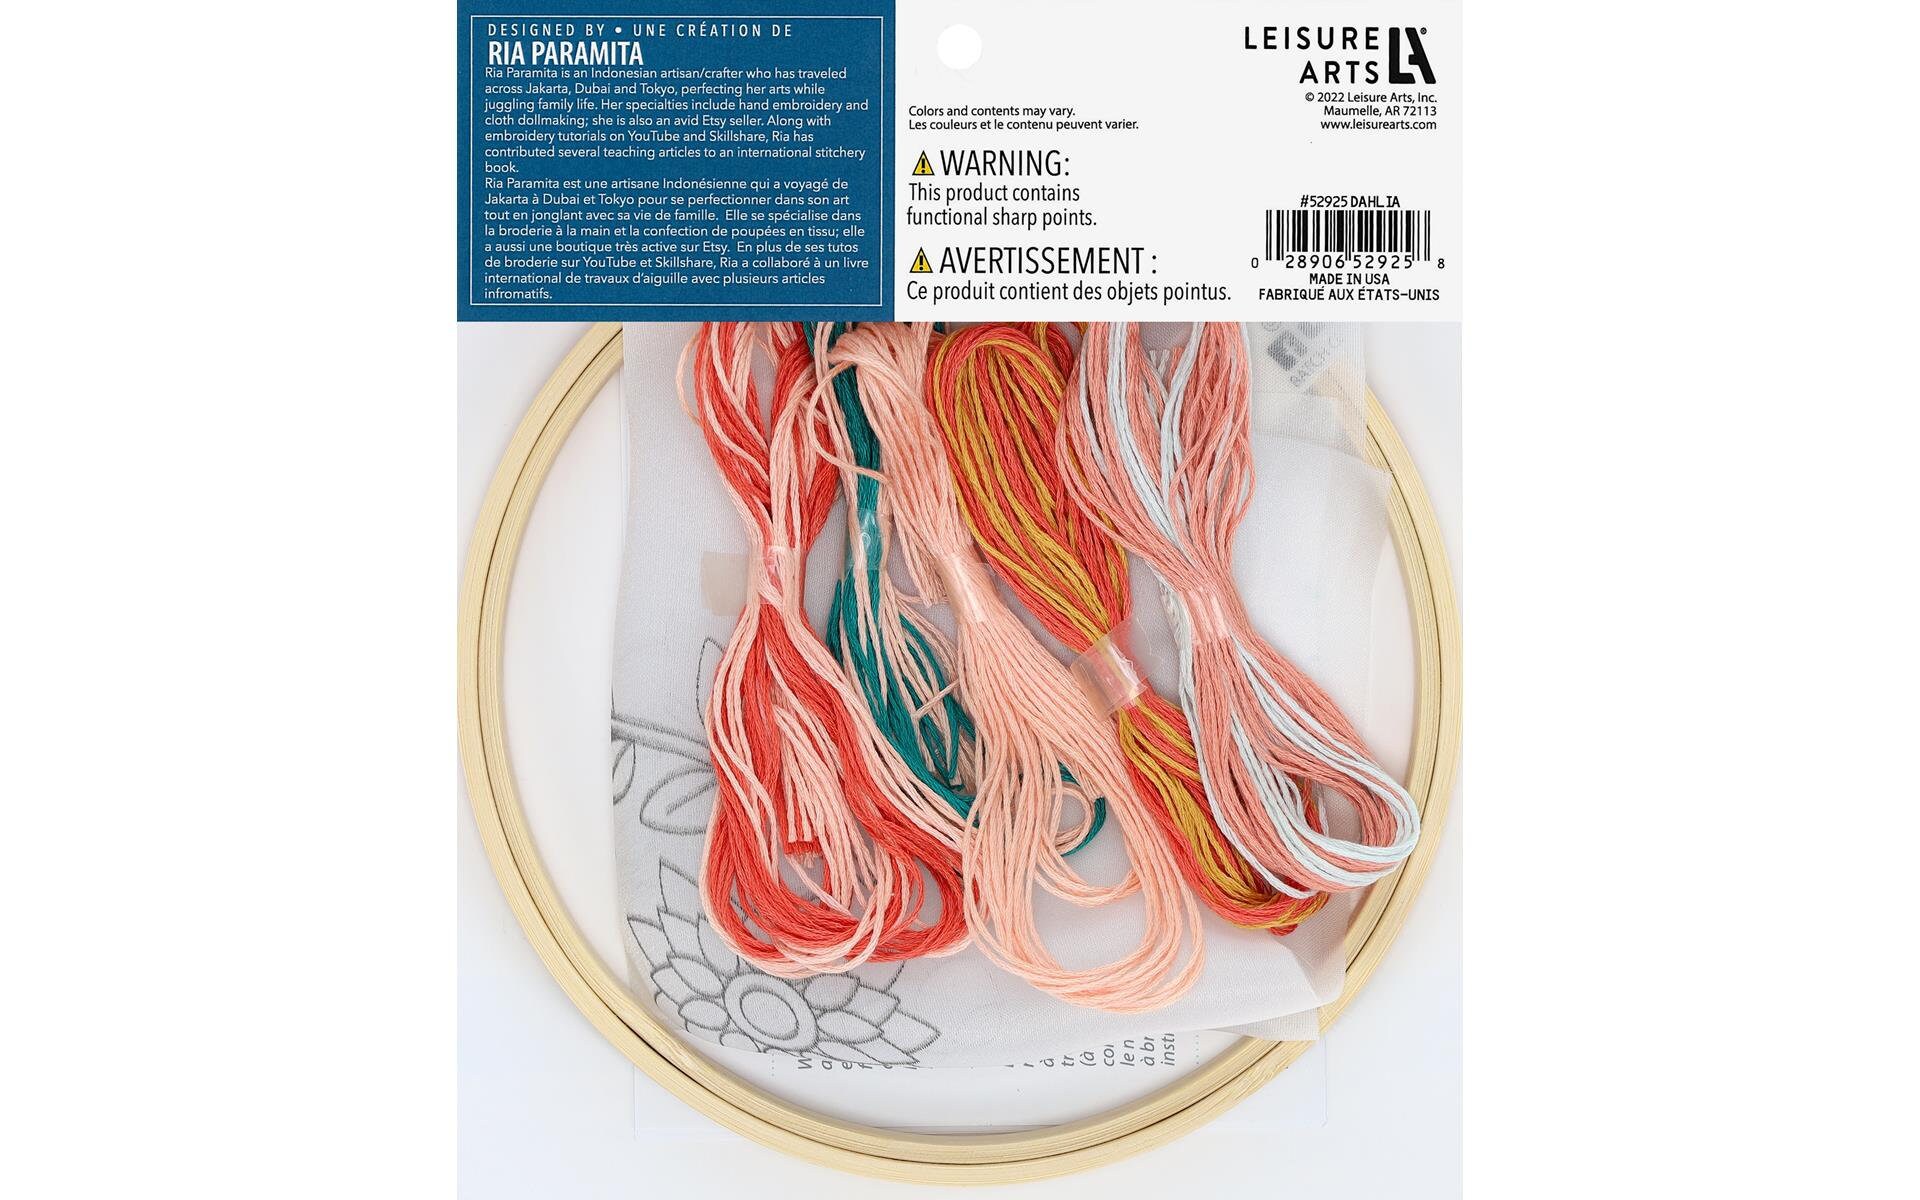  LEISURE ARTS Embroidery Kit 6 Dahlia - Embroidery kit